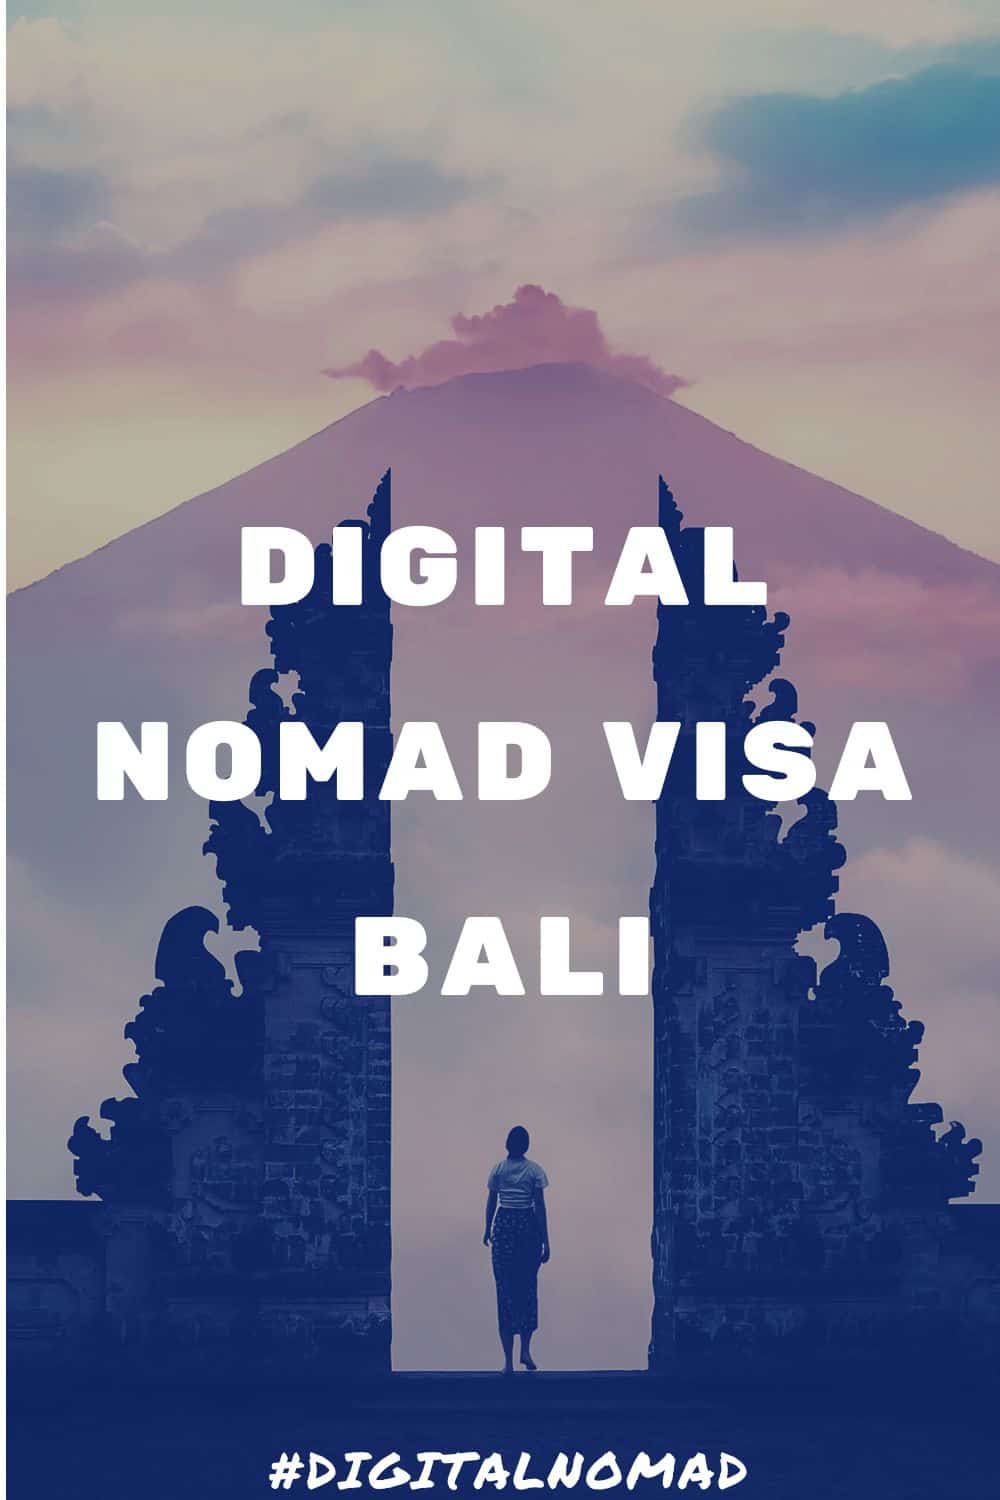 Bali digital nomad visa – Latest Information